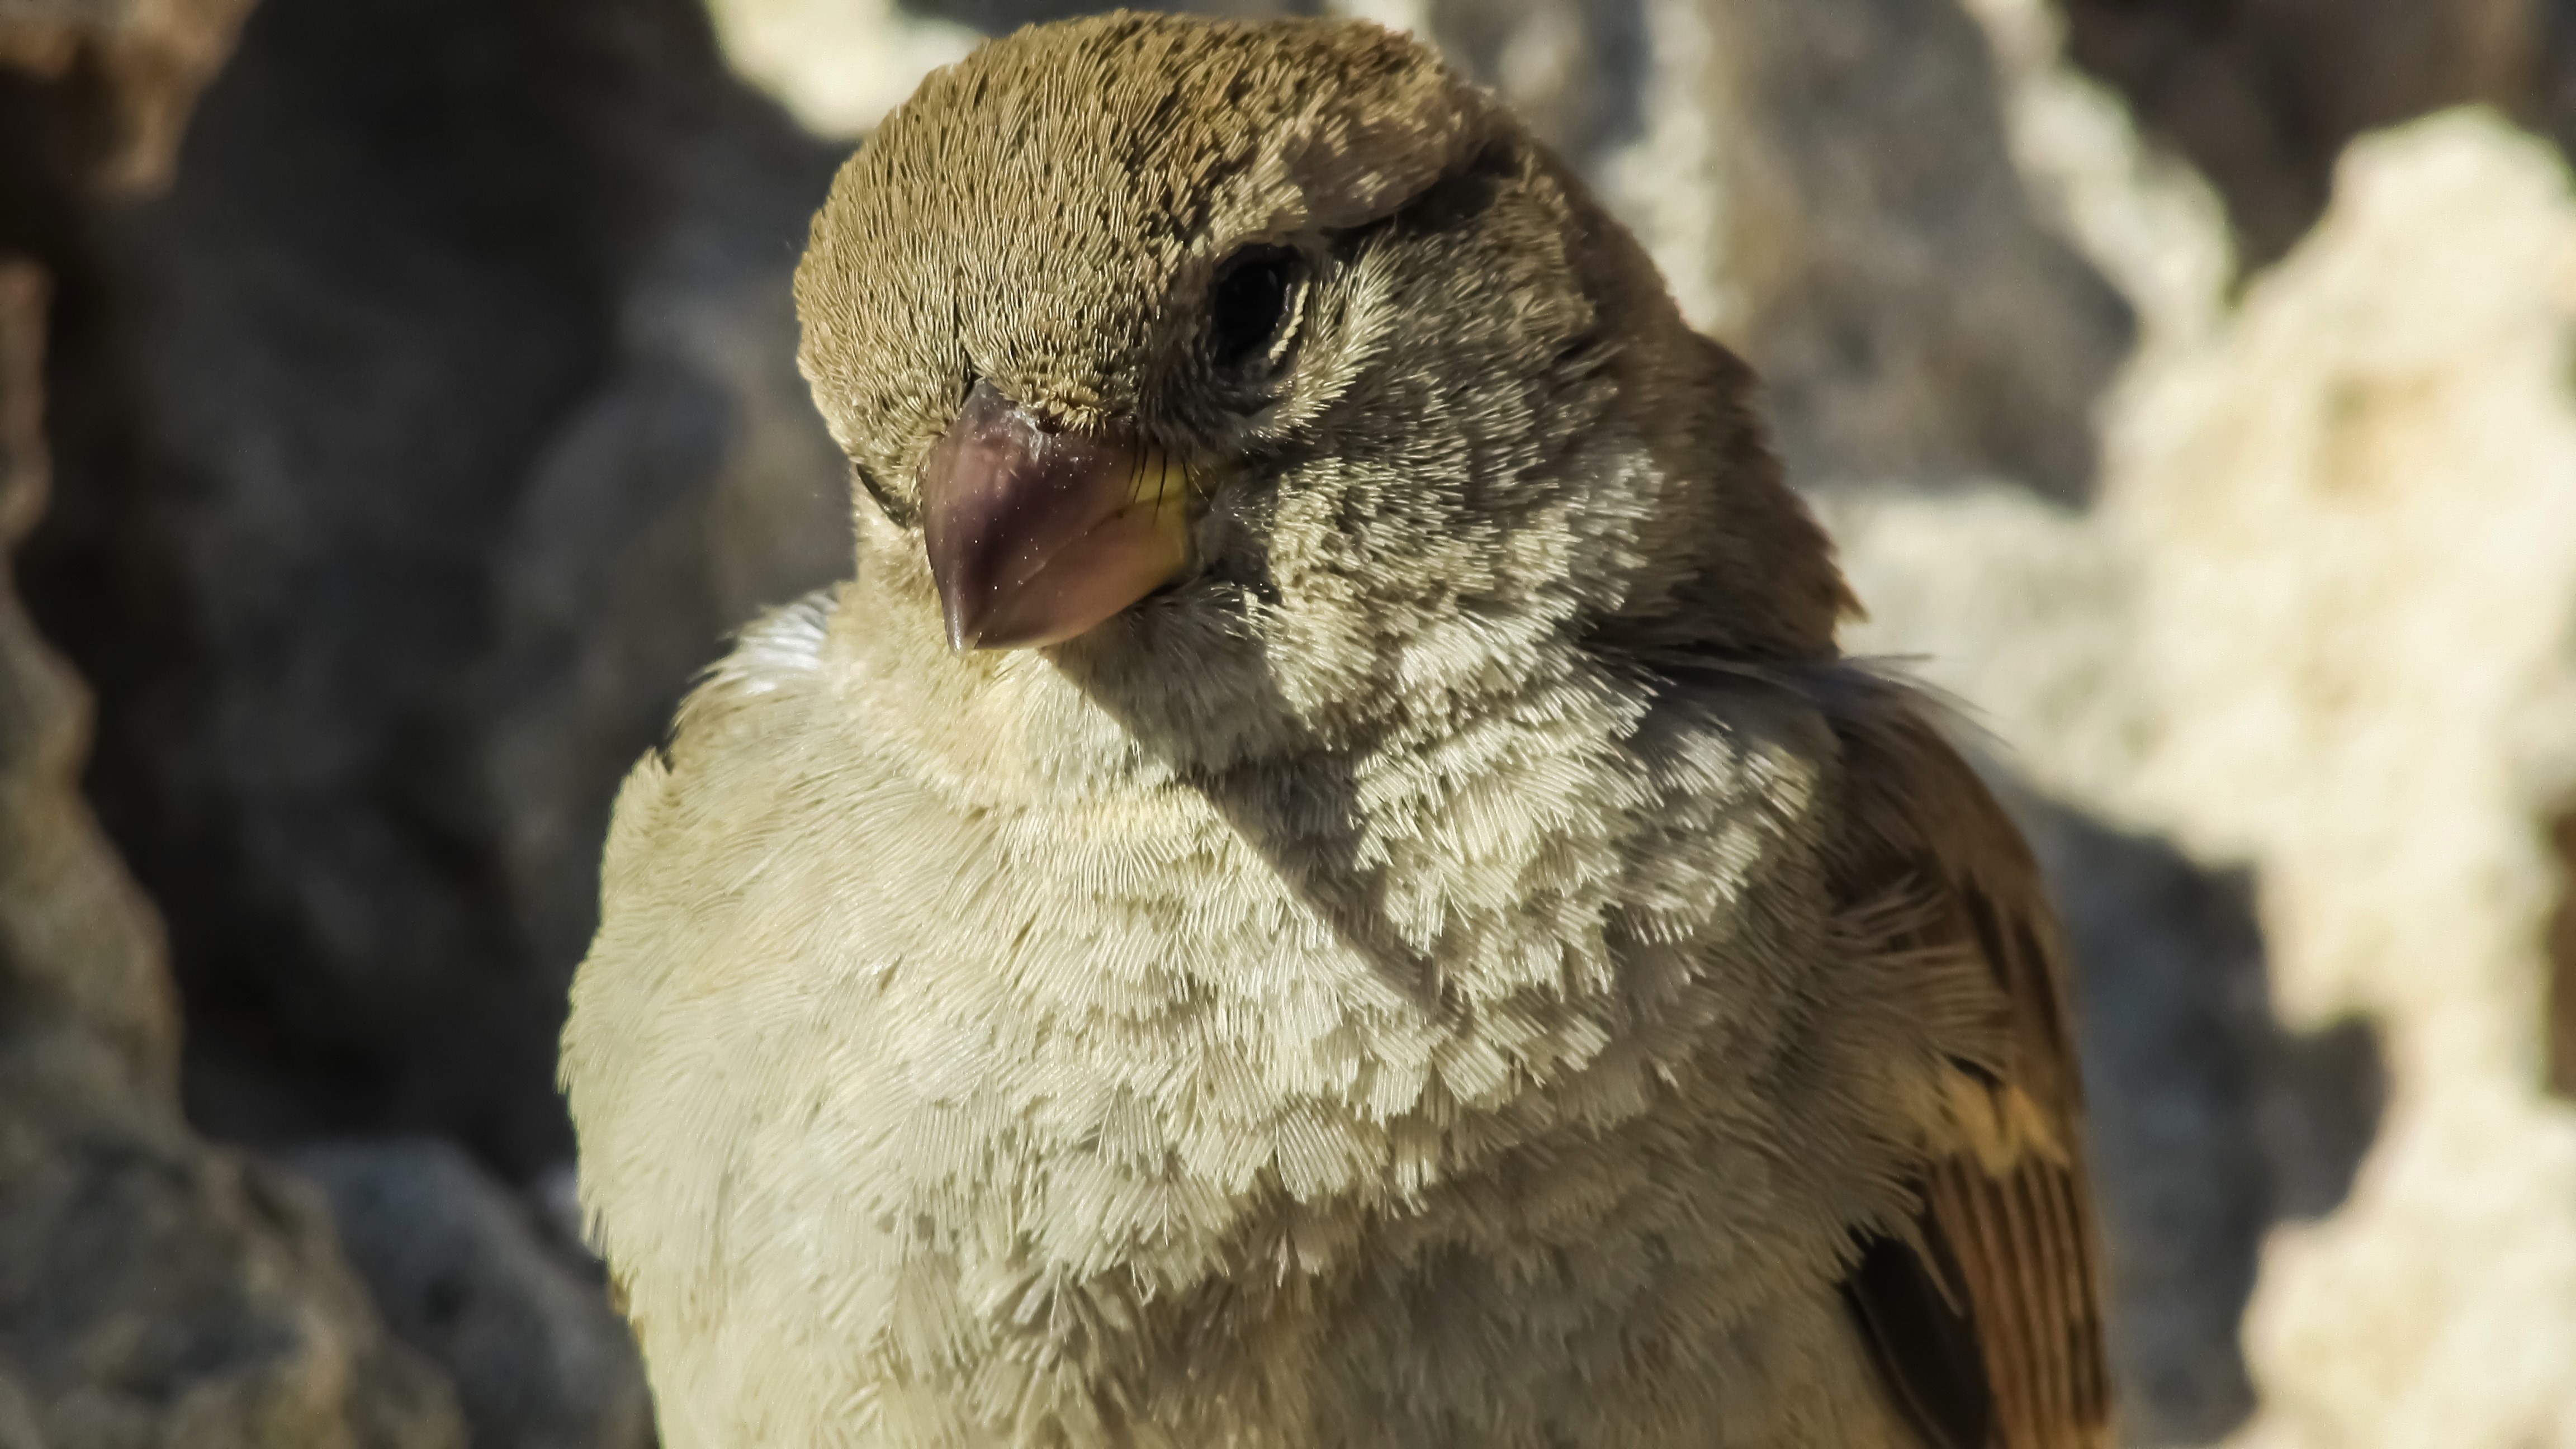 brown sparrow bird